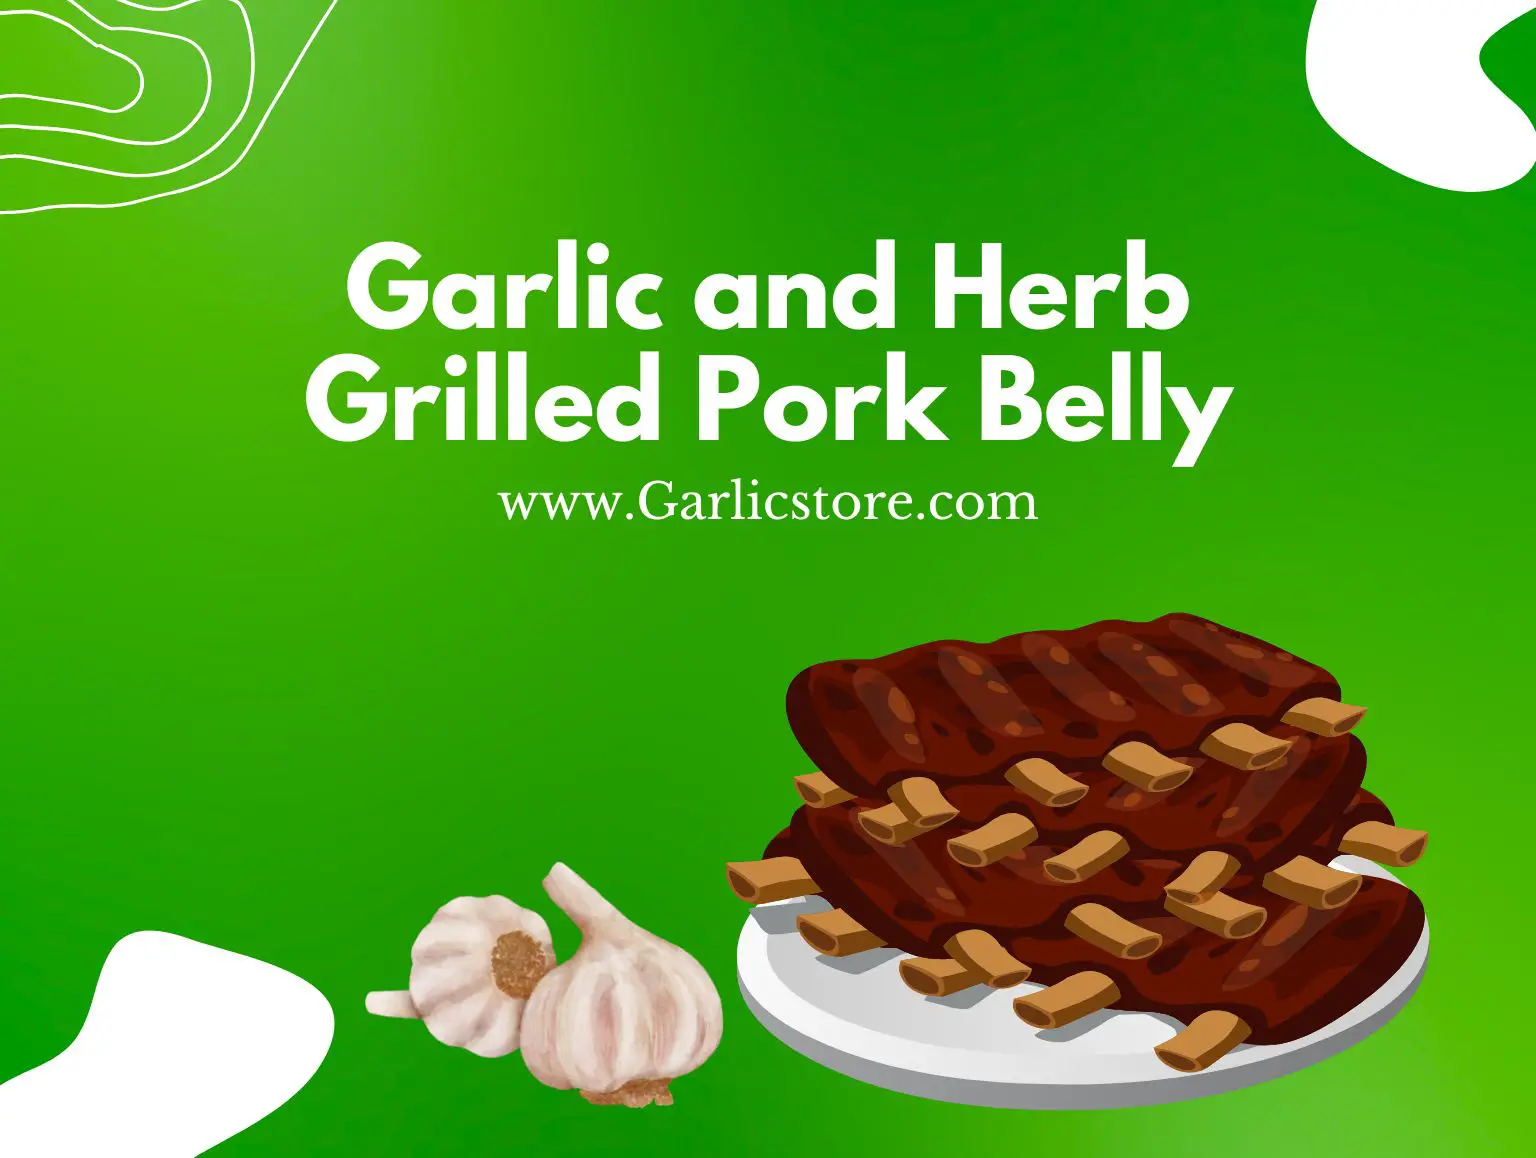 Garlic and Herb Grilled Pork Belly